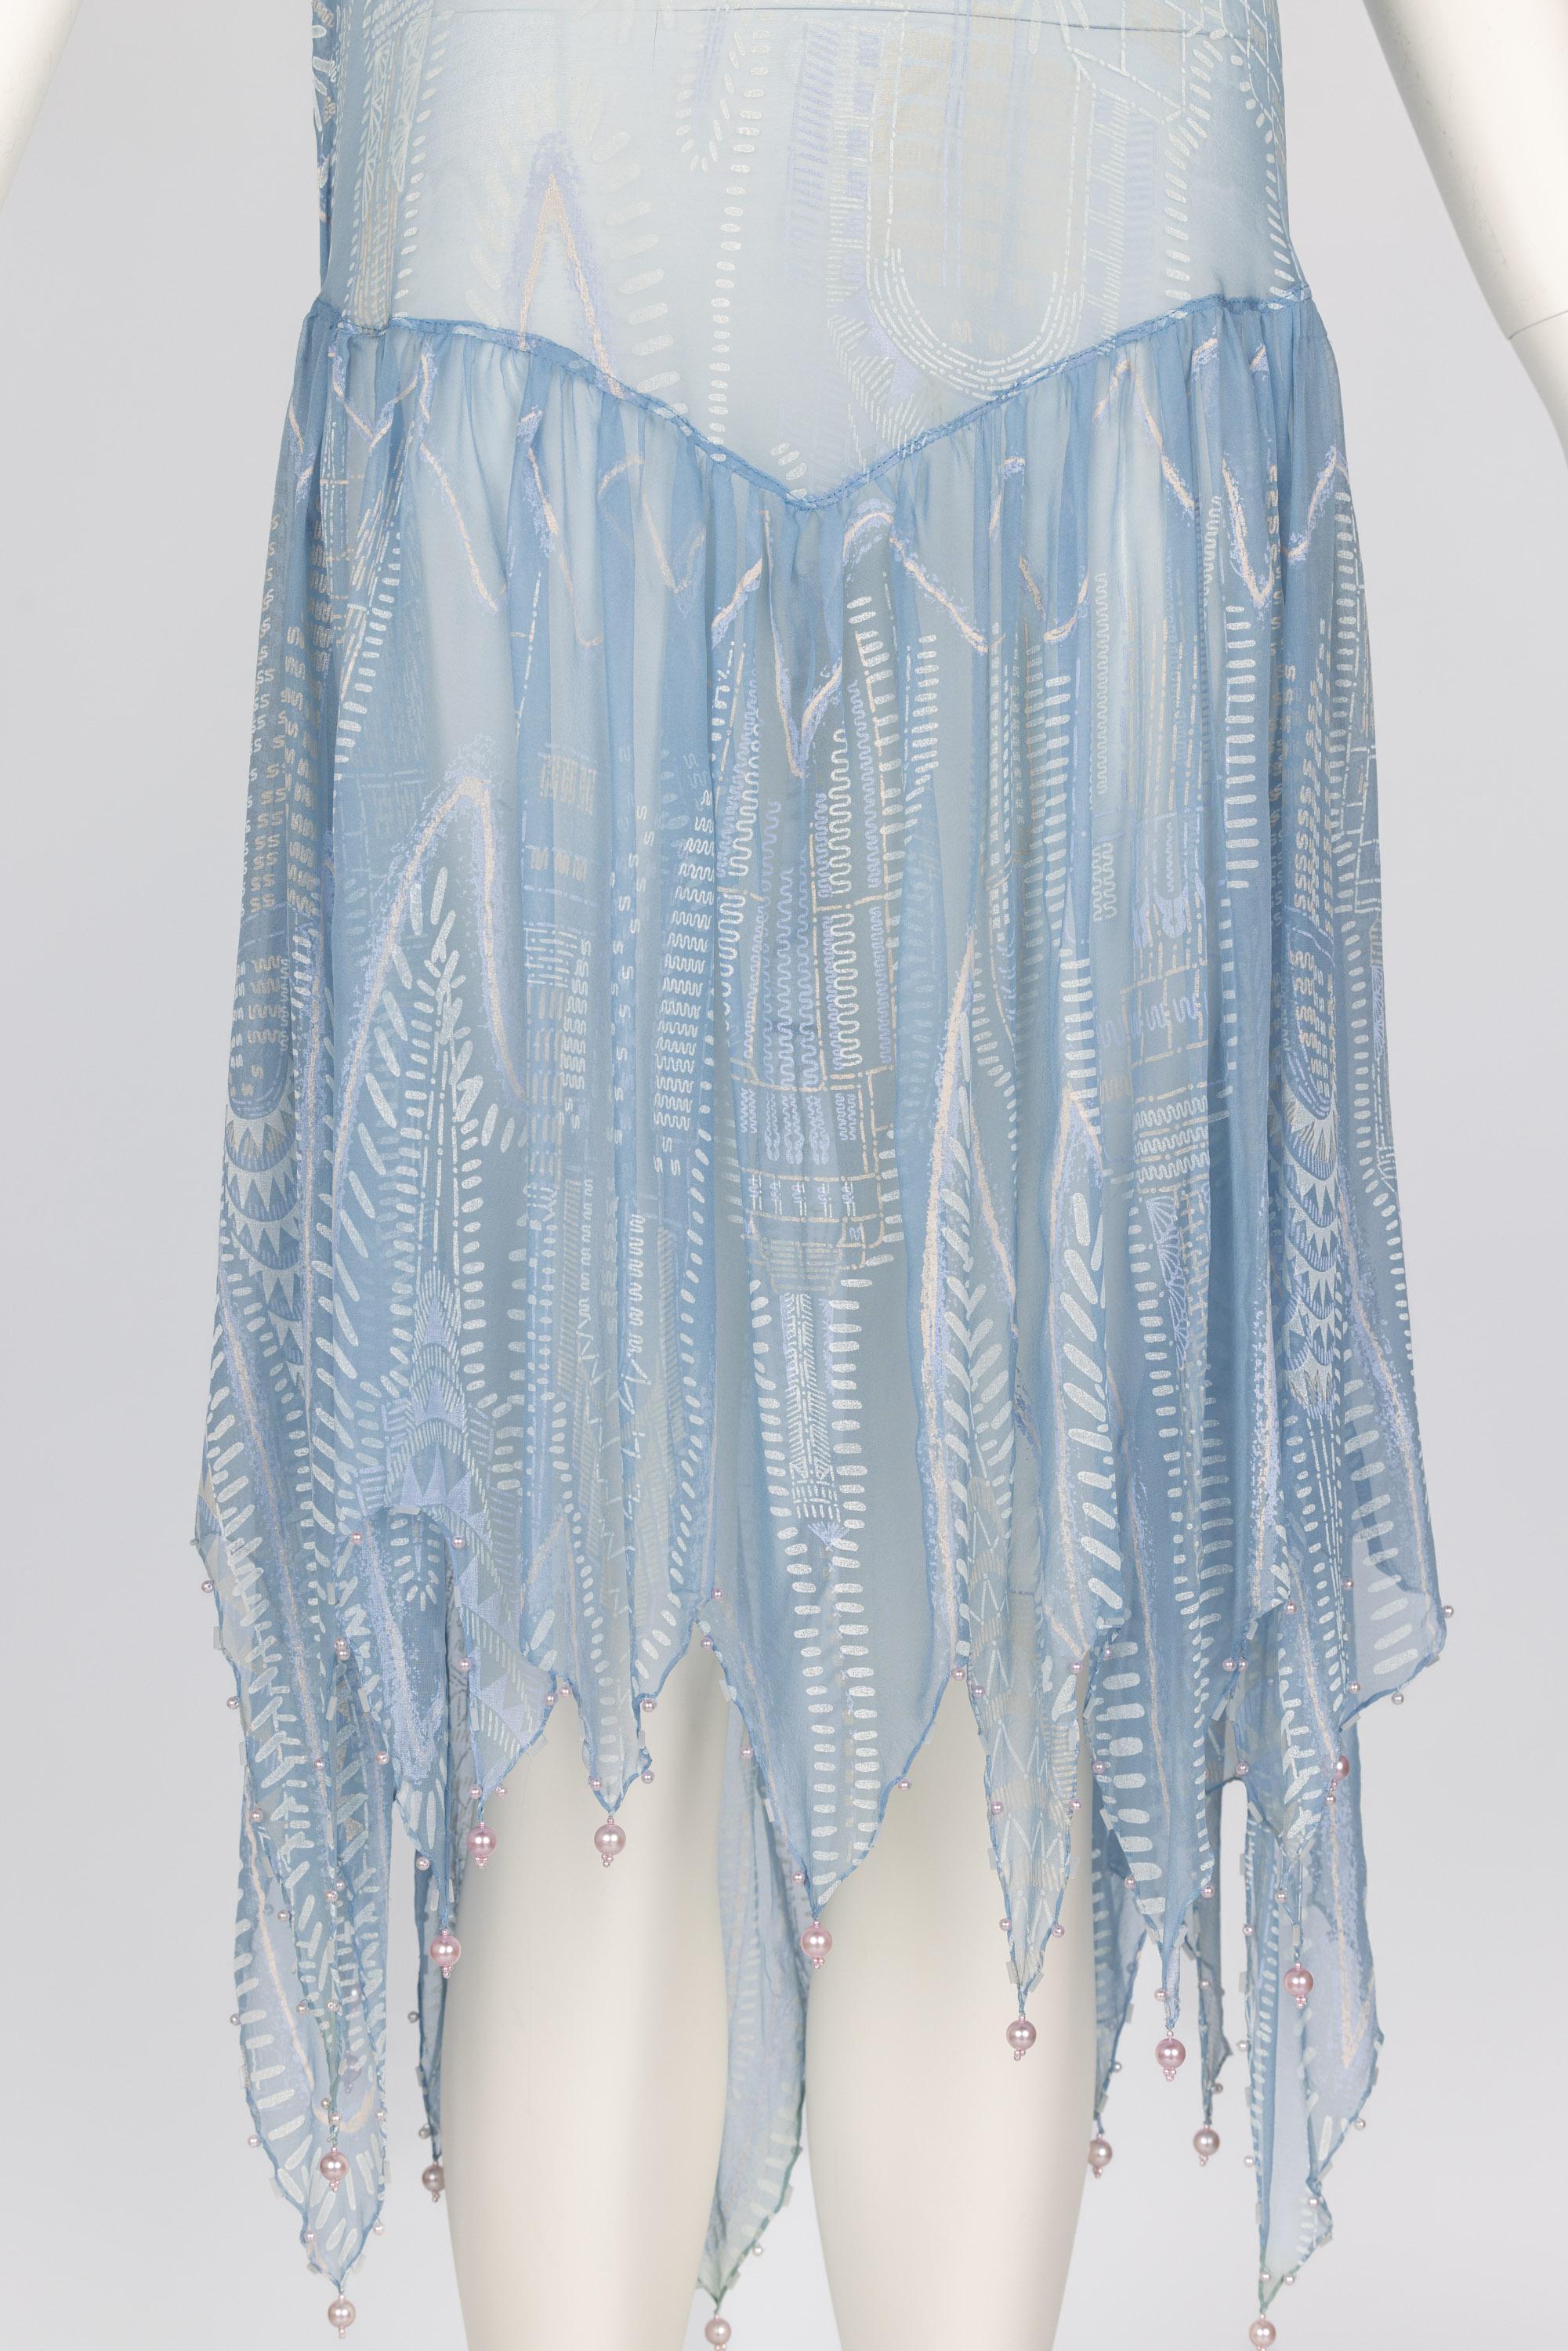 Zandra Rhodes Light Blue Hand Printed Sheer Silk Pearl Beaded Dress Museum Piece For Sale 7